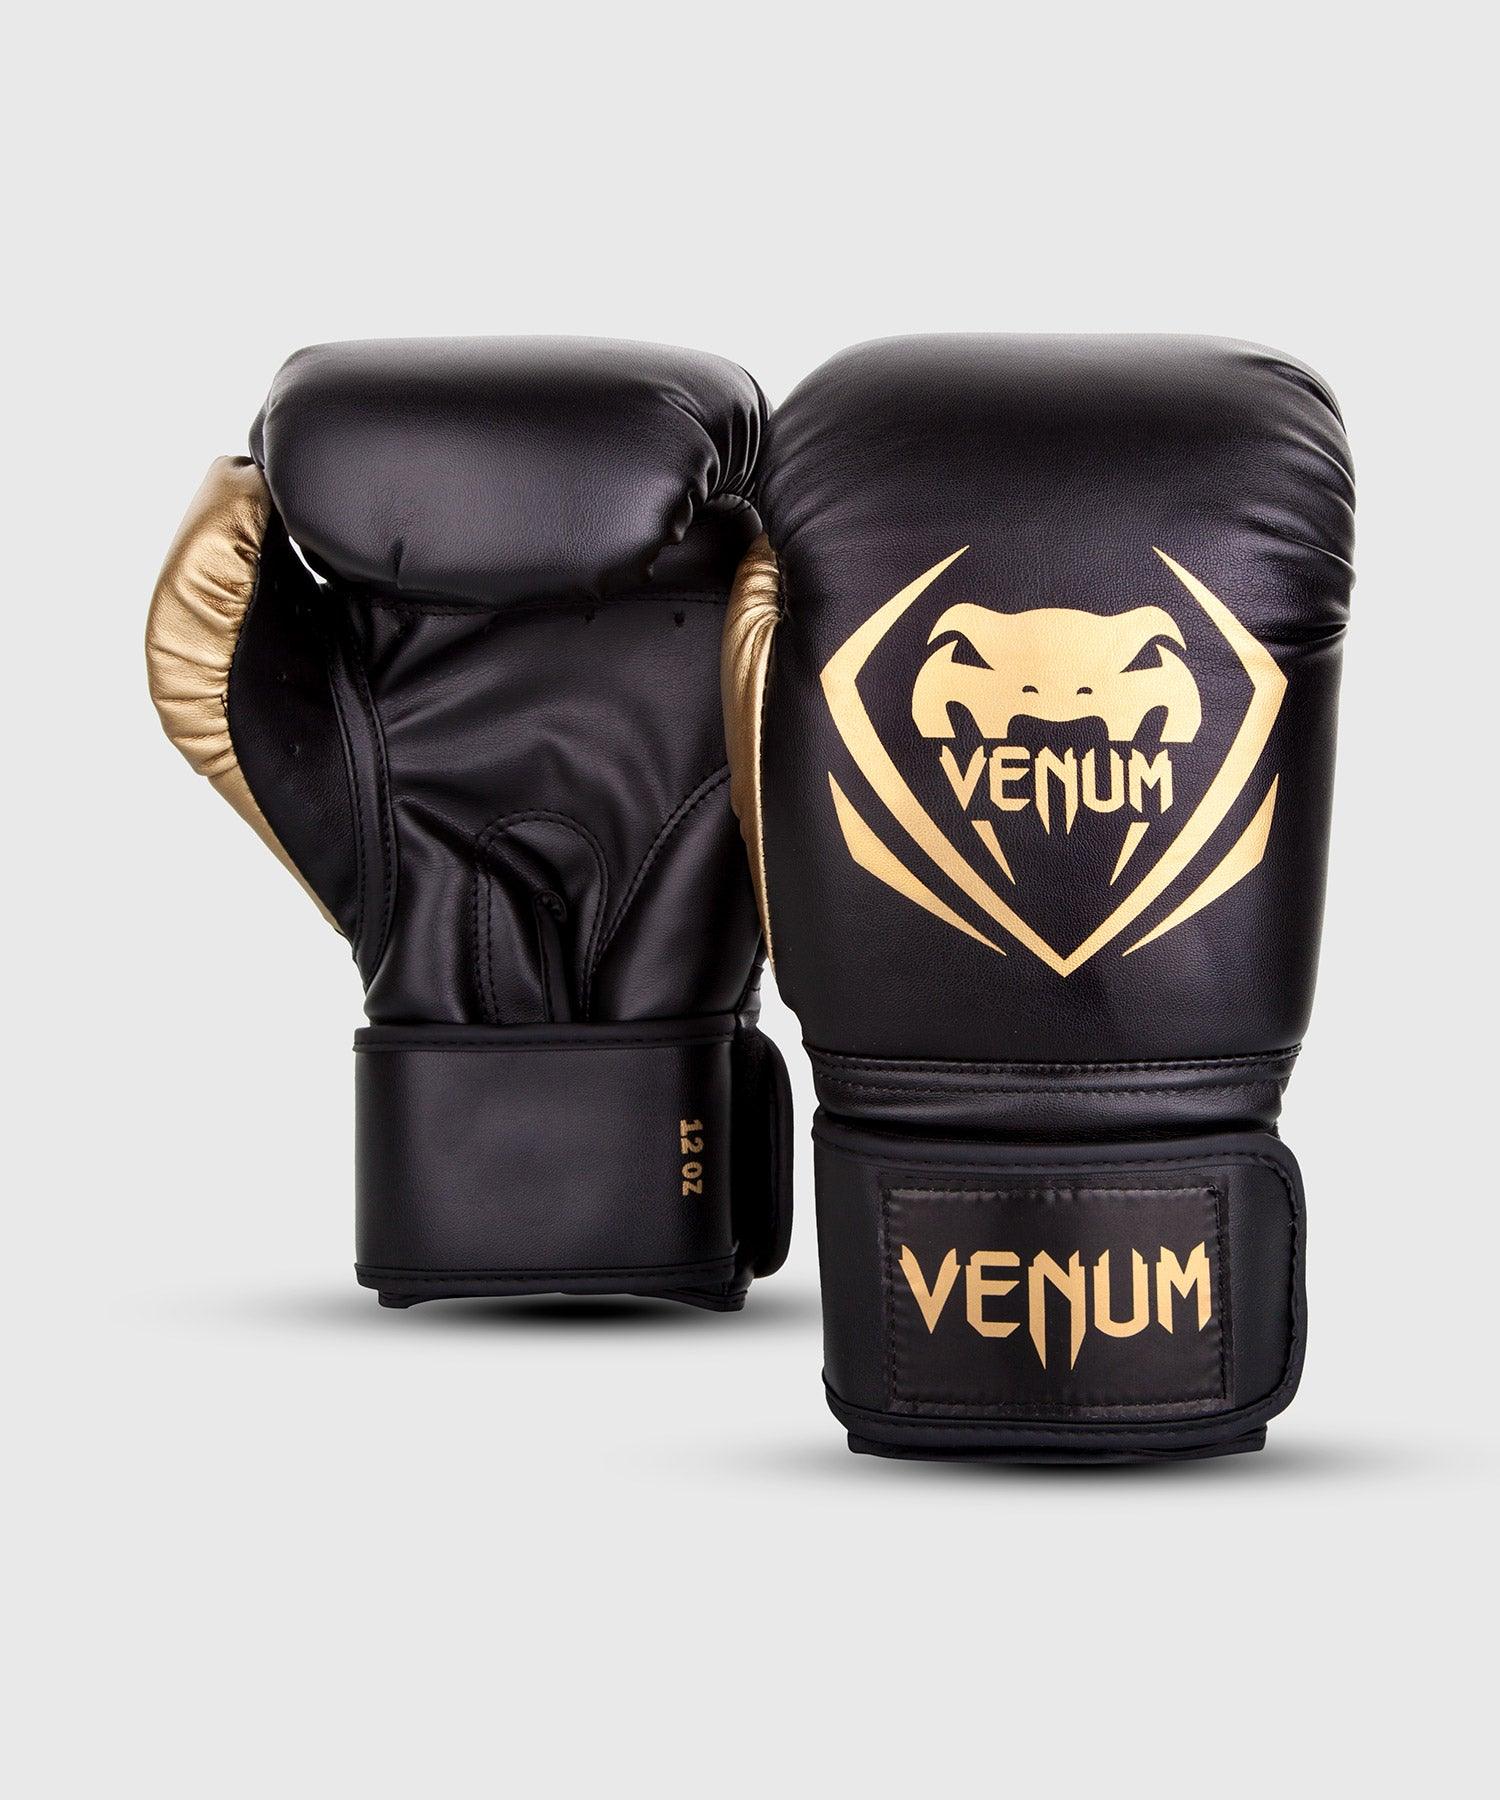 Venum Contender Boxing Gloves - Black/Gold Picture 2